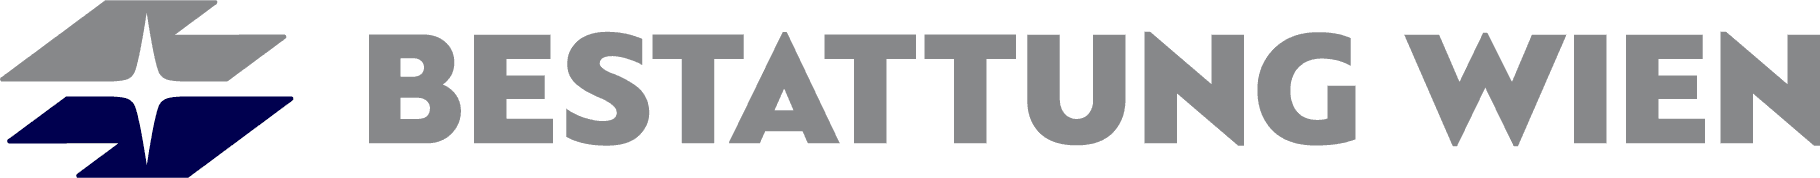 Logo BESTATTUNG WIEN - Kundenservice Liesing